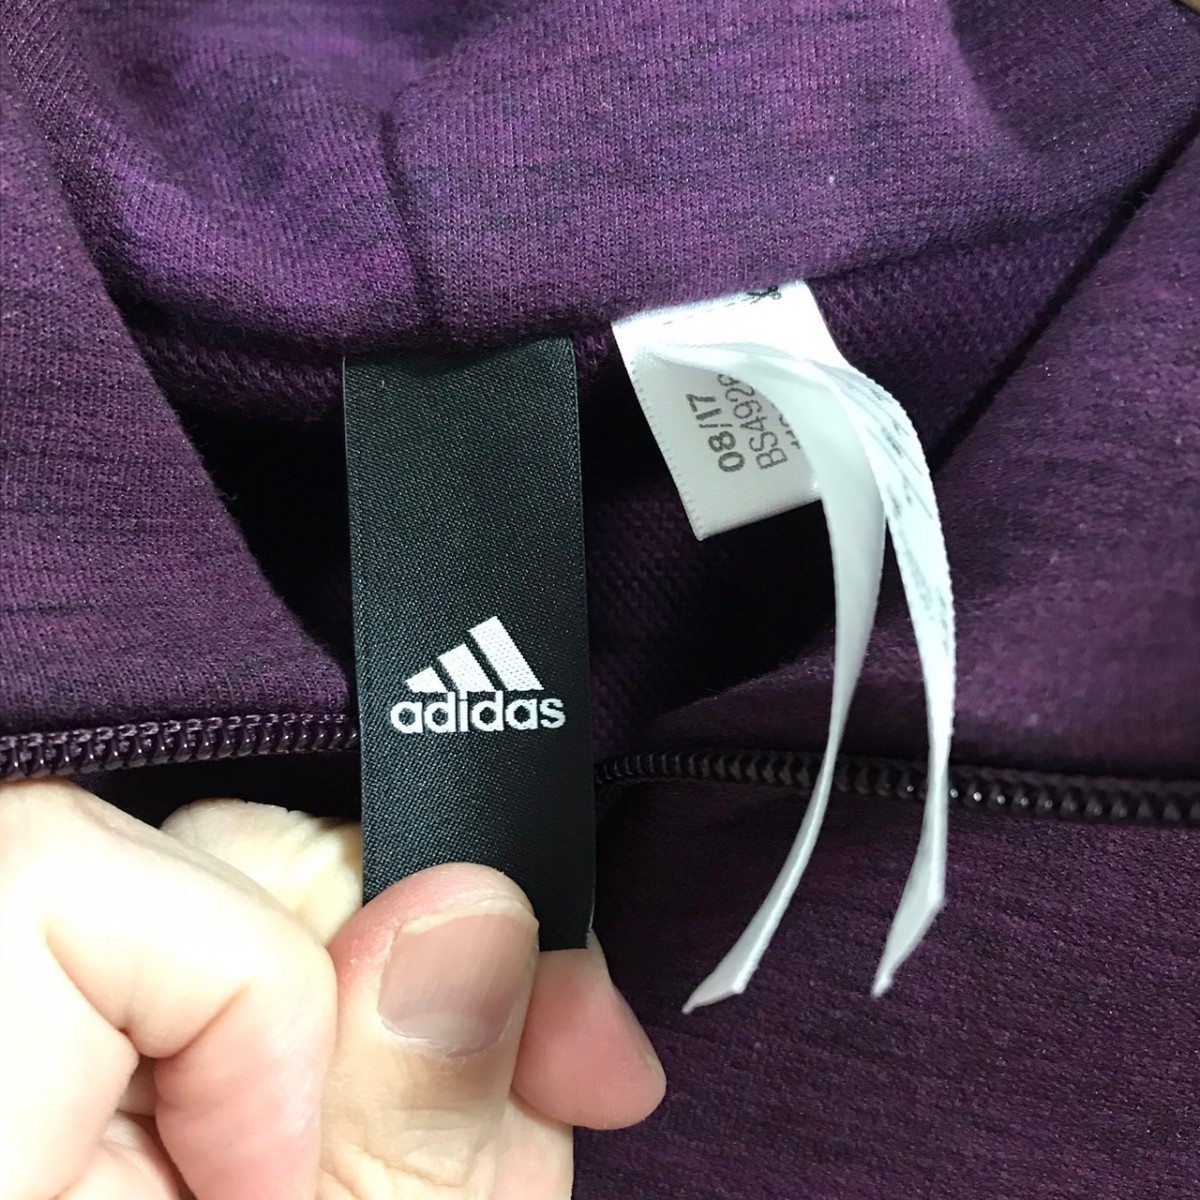 F9804dL adidas Adidas size M sweat Parker Zip up Parker sport training purple finger hole attaching Sam hole 